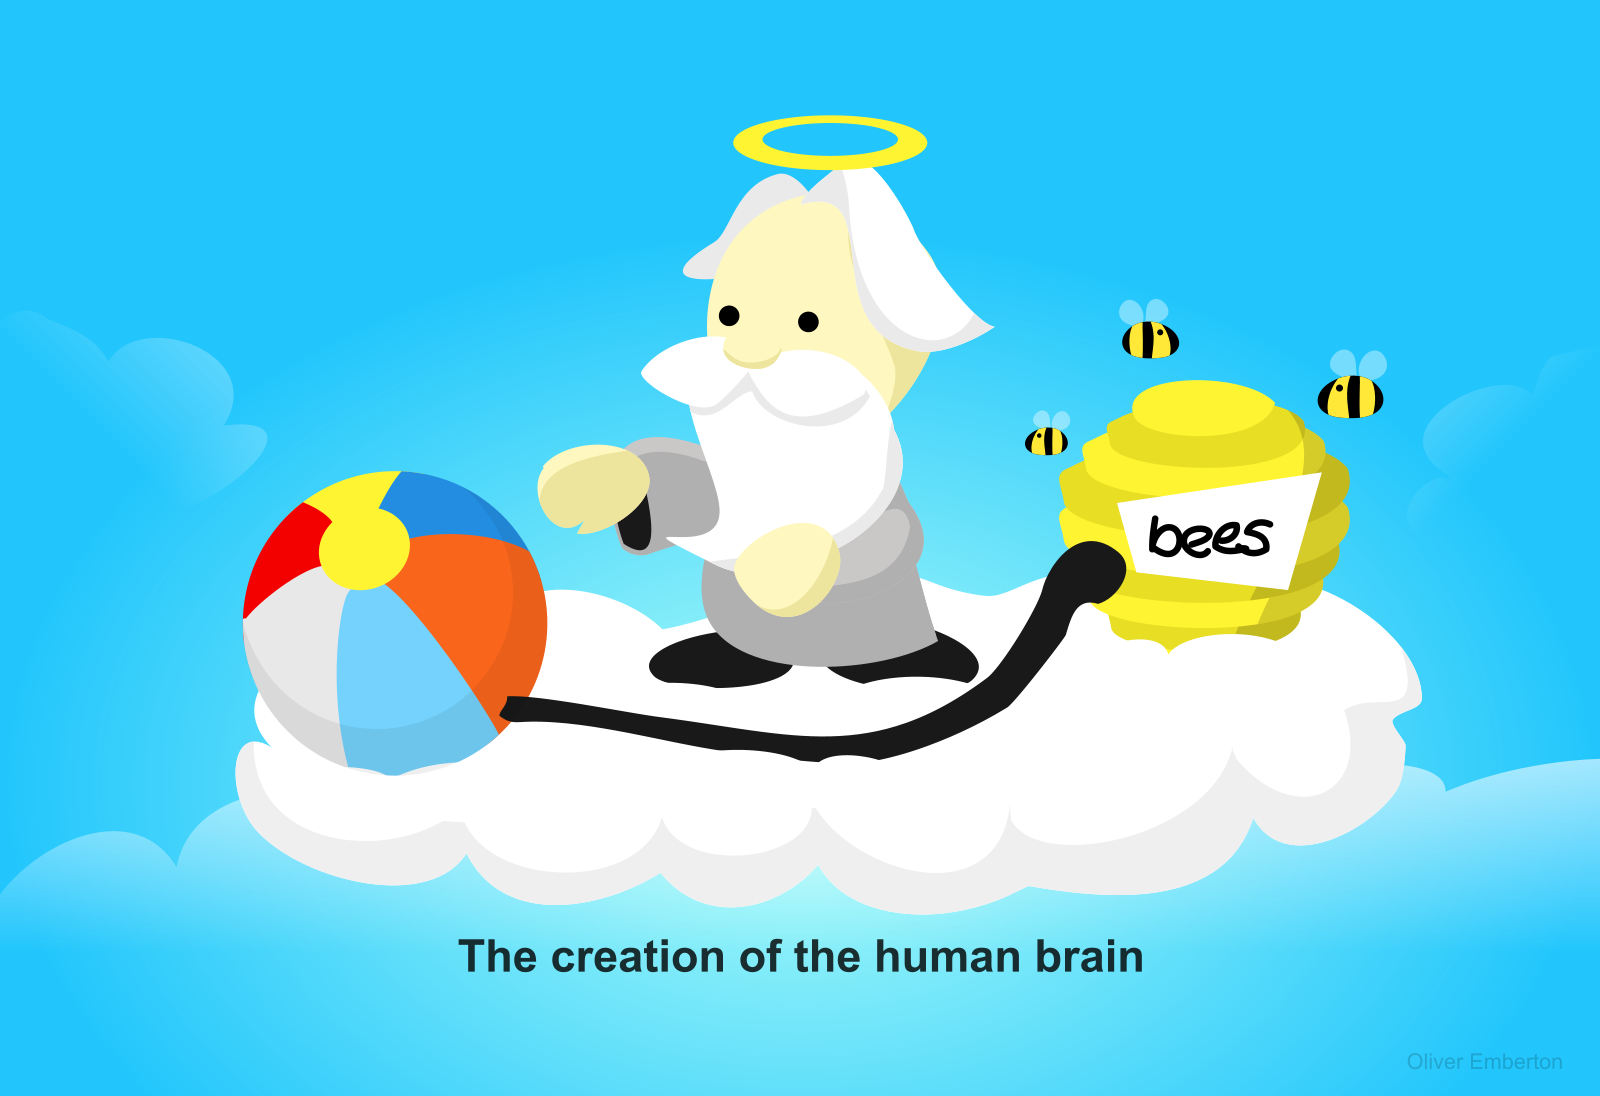 Creating of the human brain